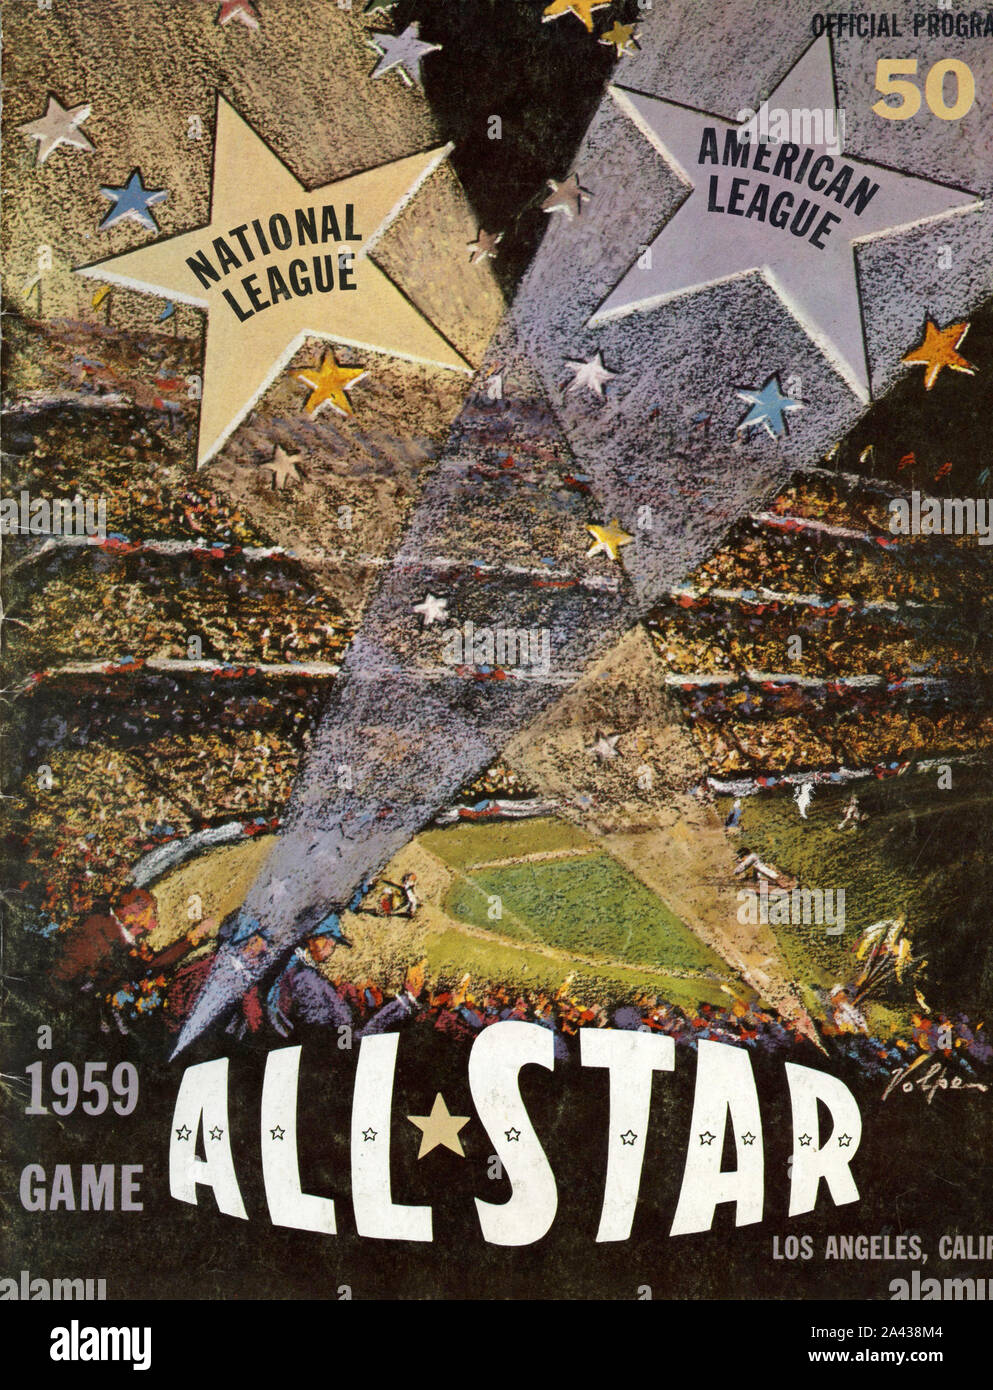 Vintage souvenir Programm Abdeckung für die Major League Baseball 1959 All Star Game l im Los Angeles Memorial Coliseum statt. Stockfoto